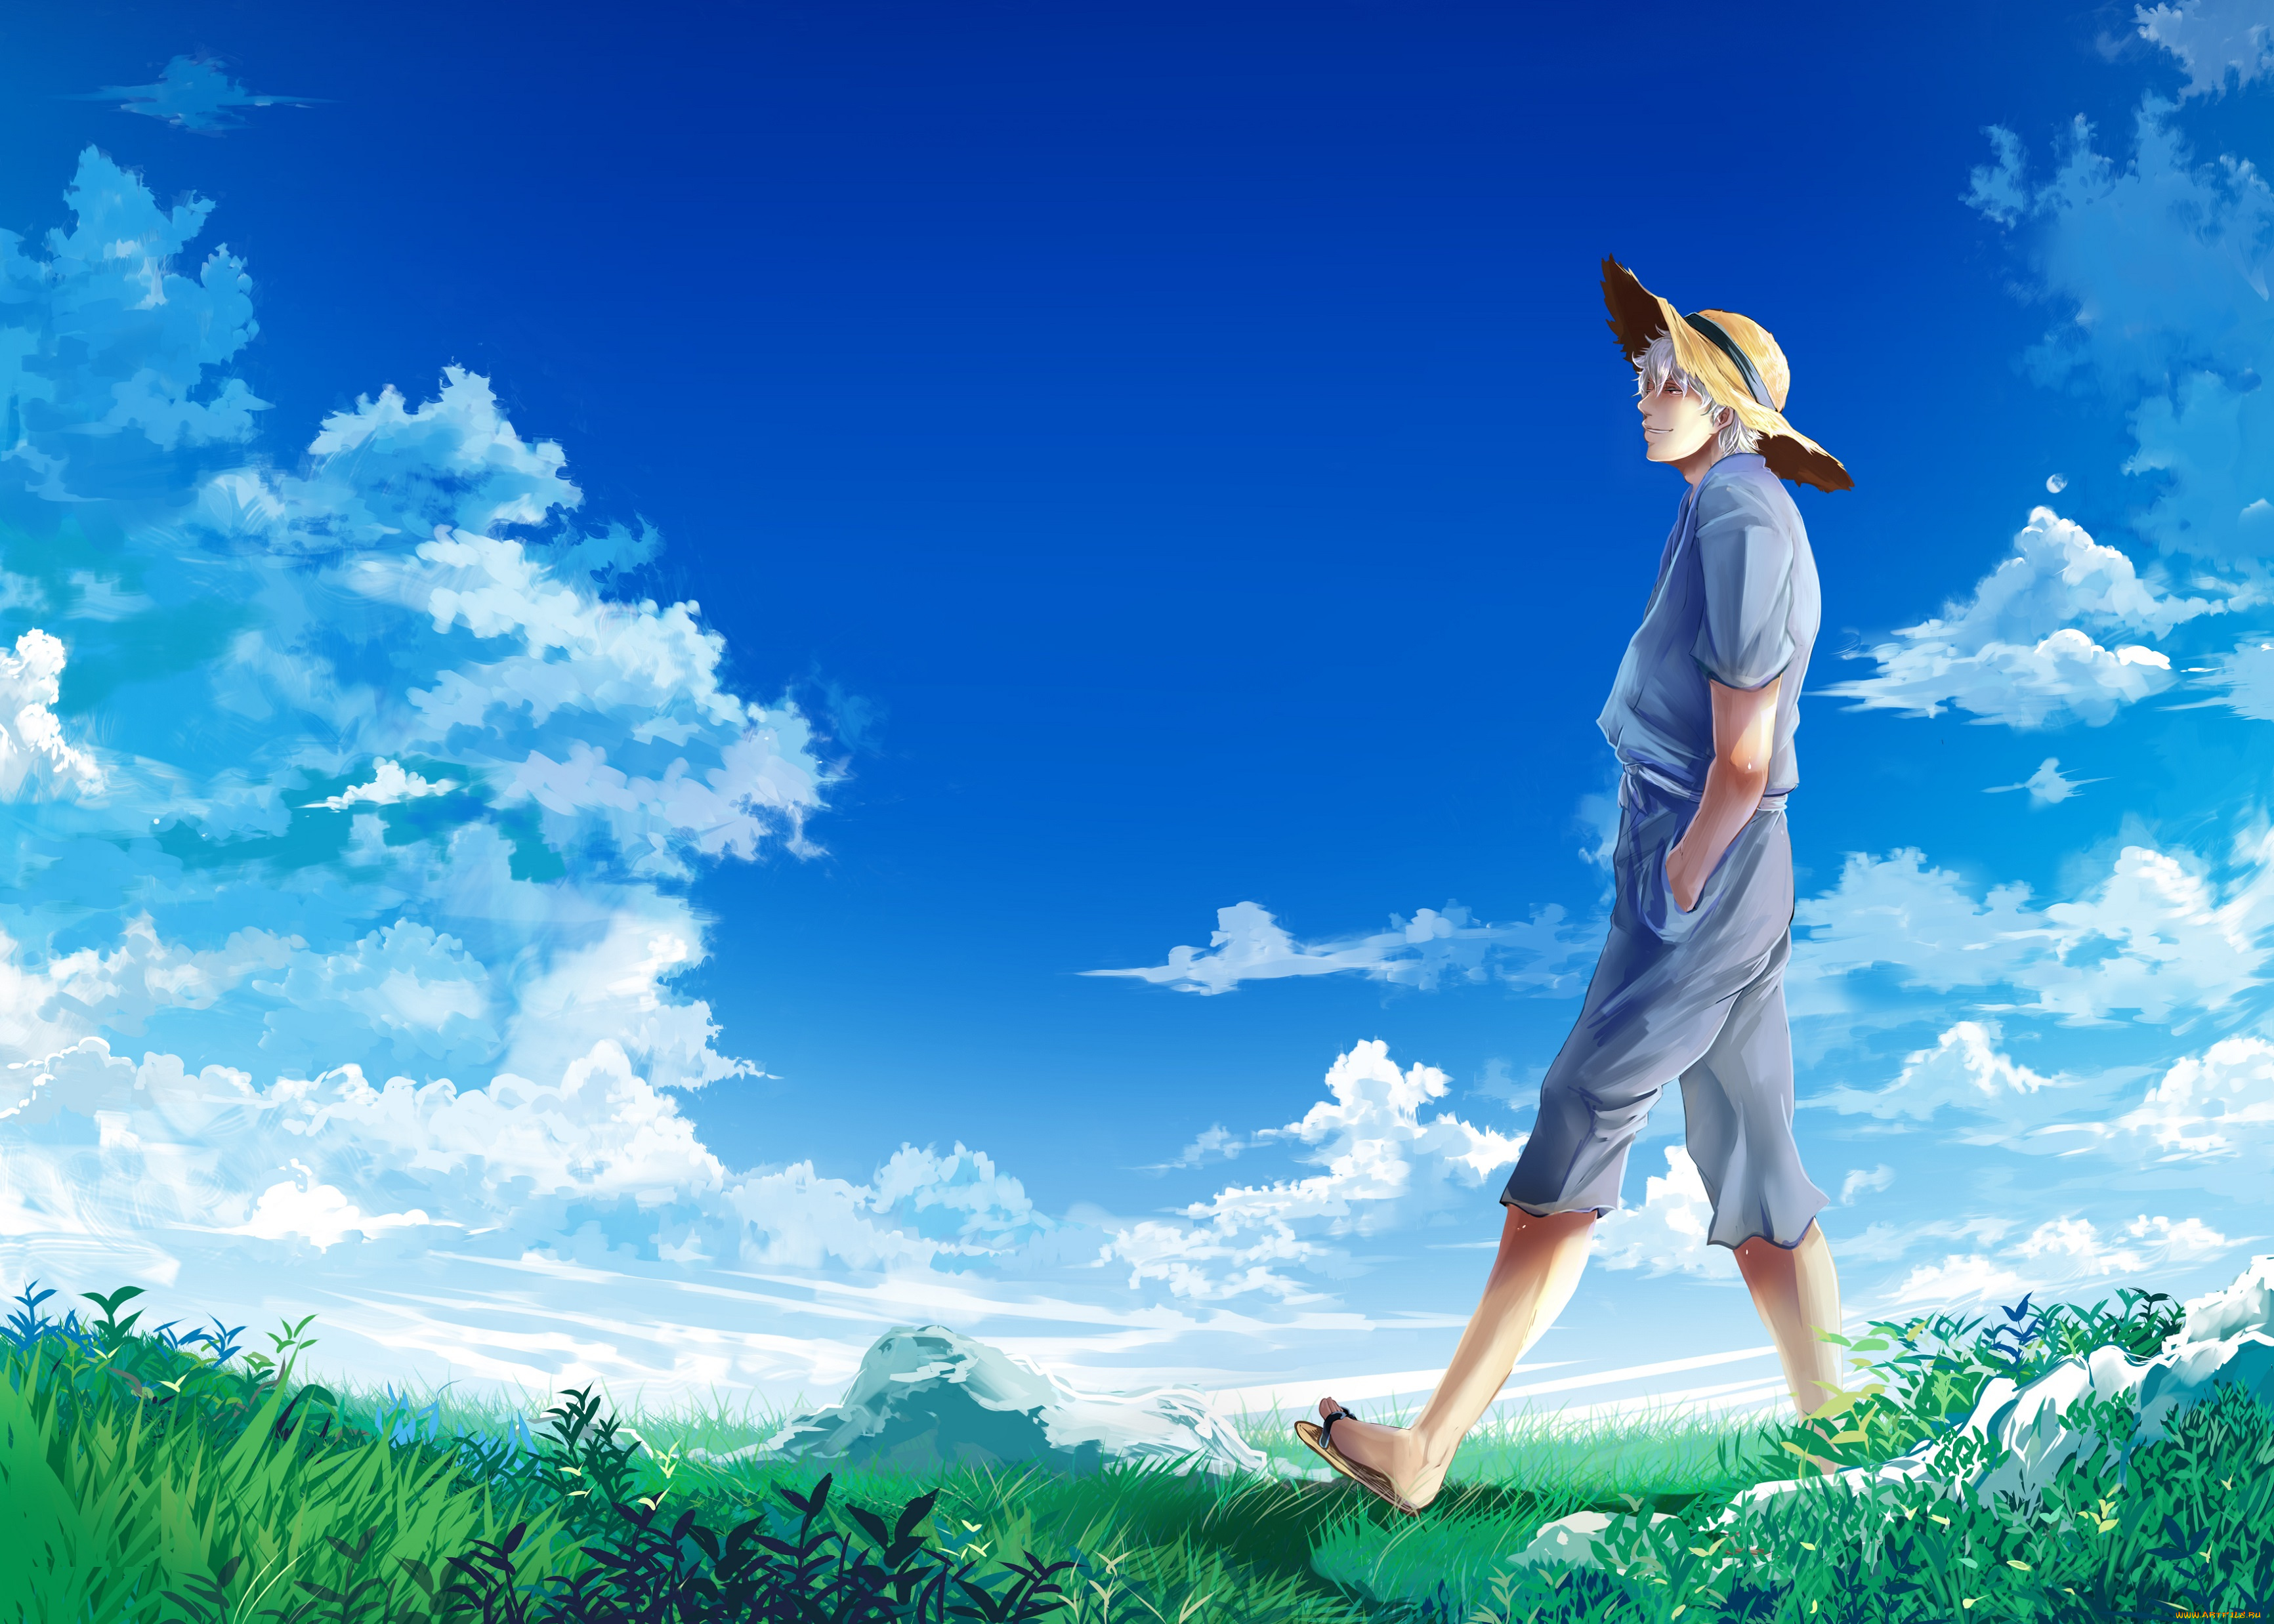 аниме, gintama, равнина, поле, трава, прогулка, синева, облака, шляпа, небо, парень